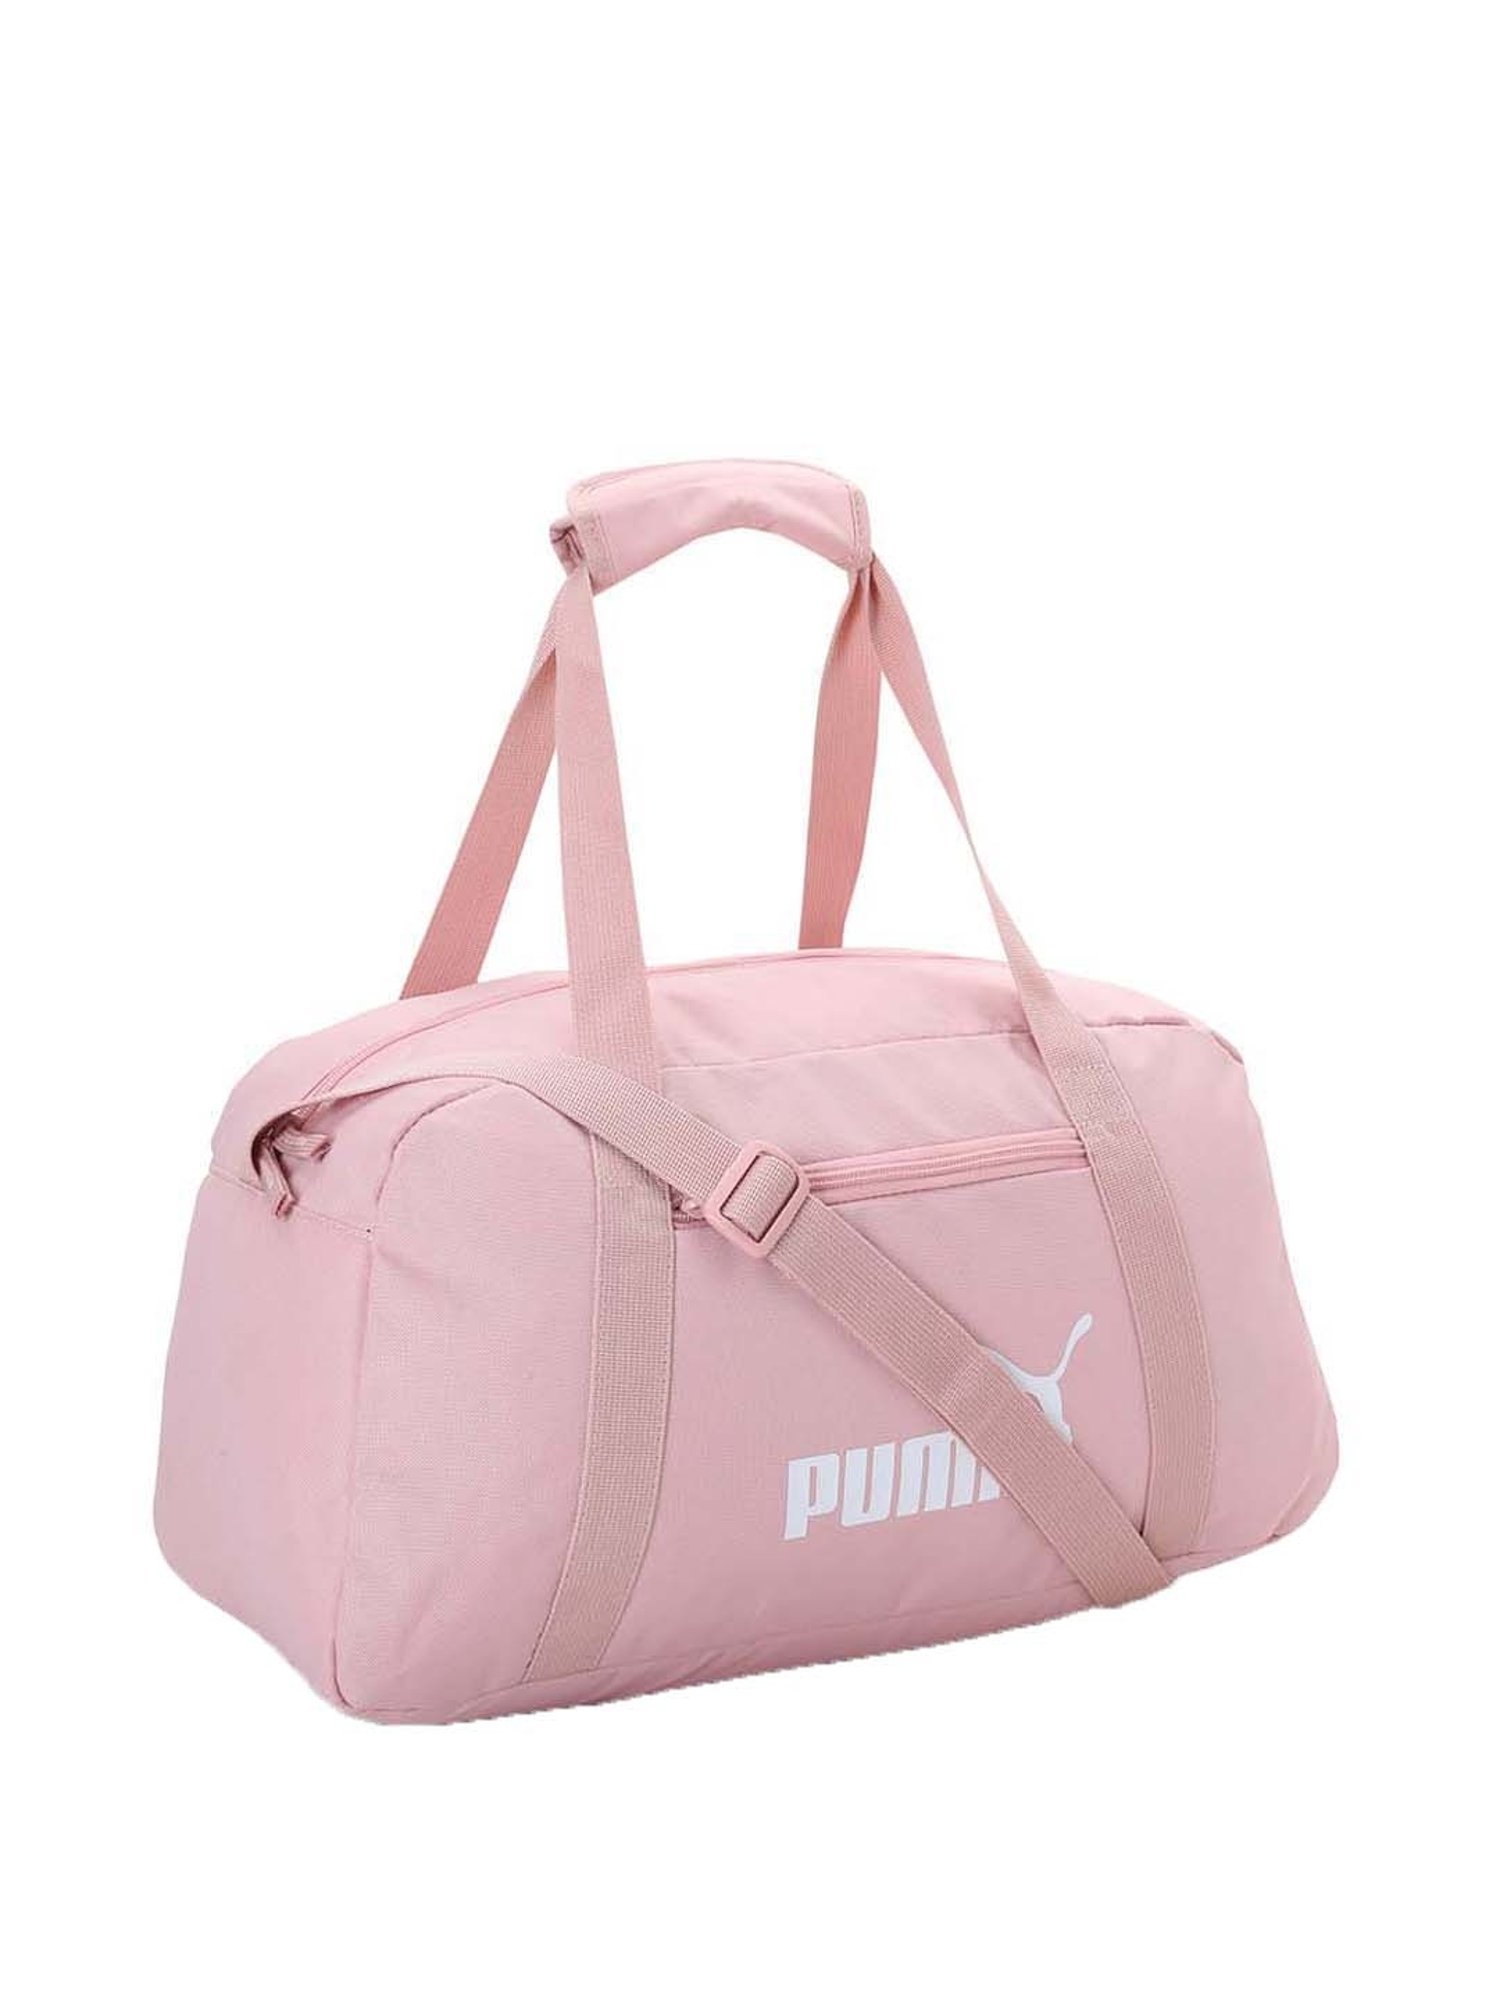 Puma Duffel Bag  Buy Puma Duffel Bag online in India